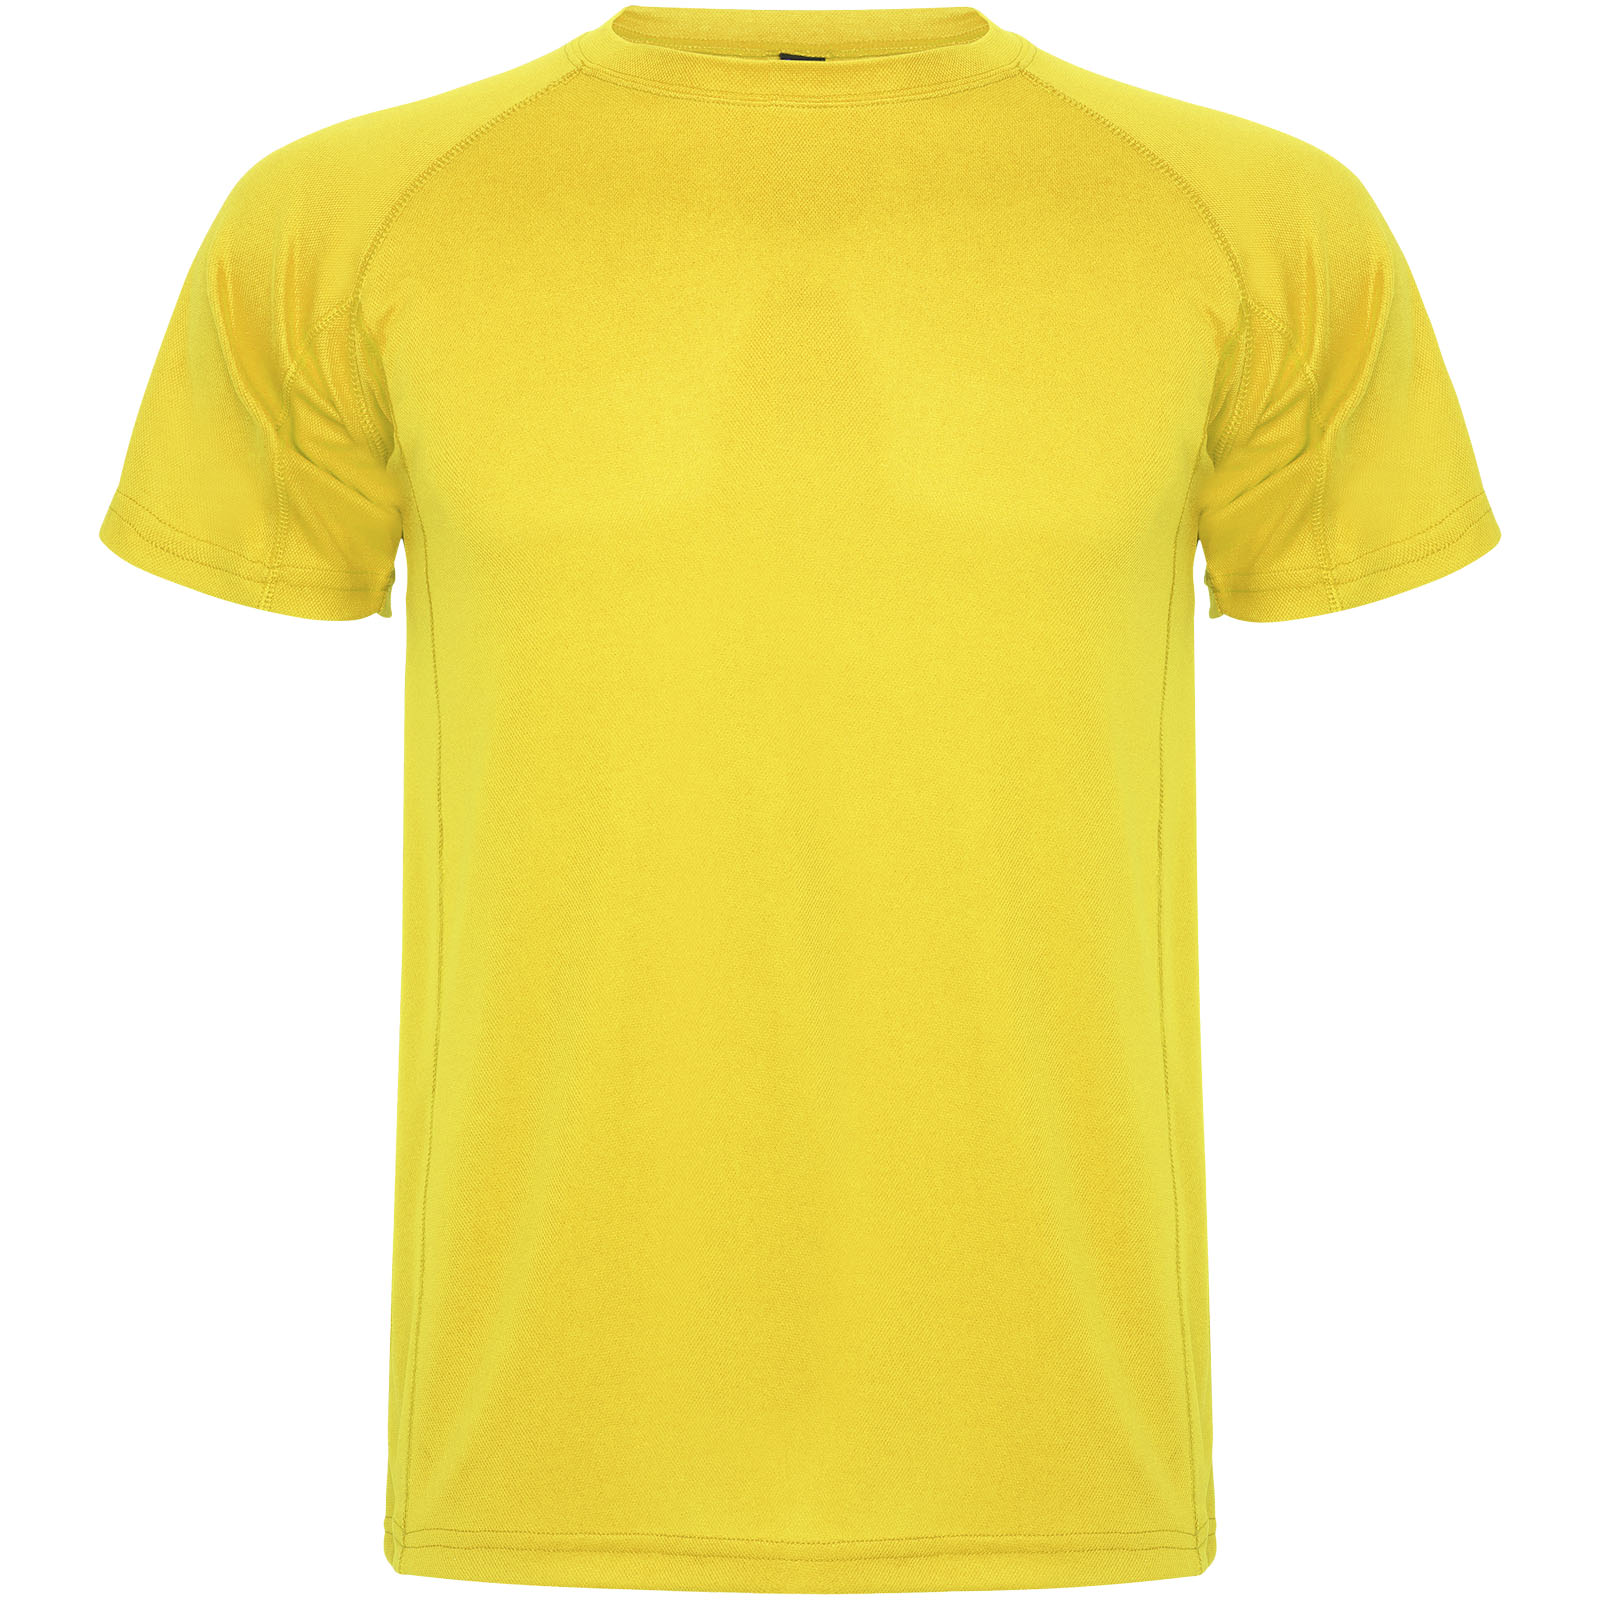 Advertising T-shirts - Montecarlo short sleeve kids sports t-shirt